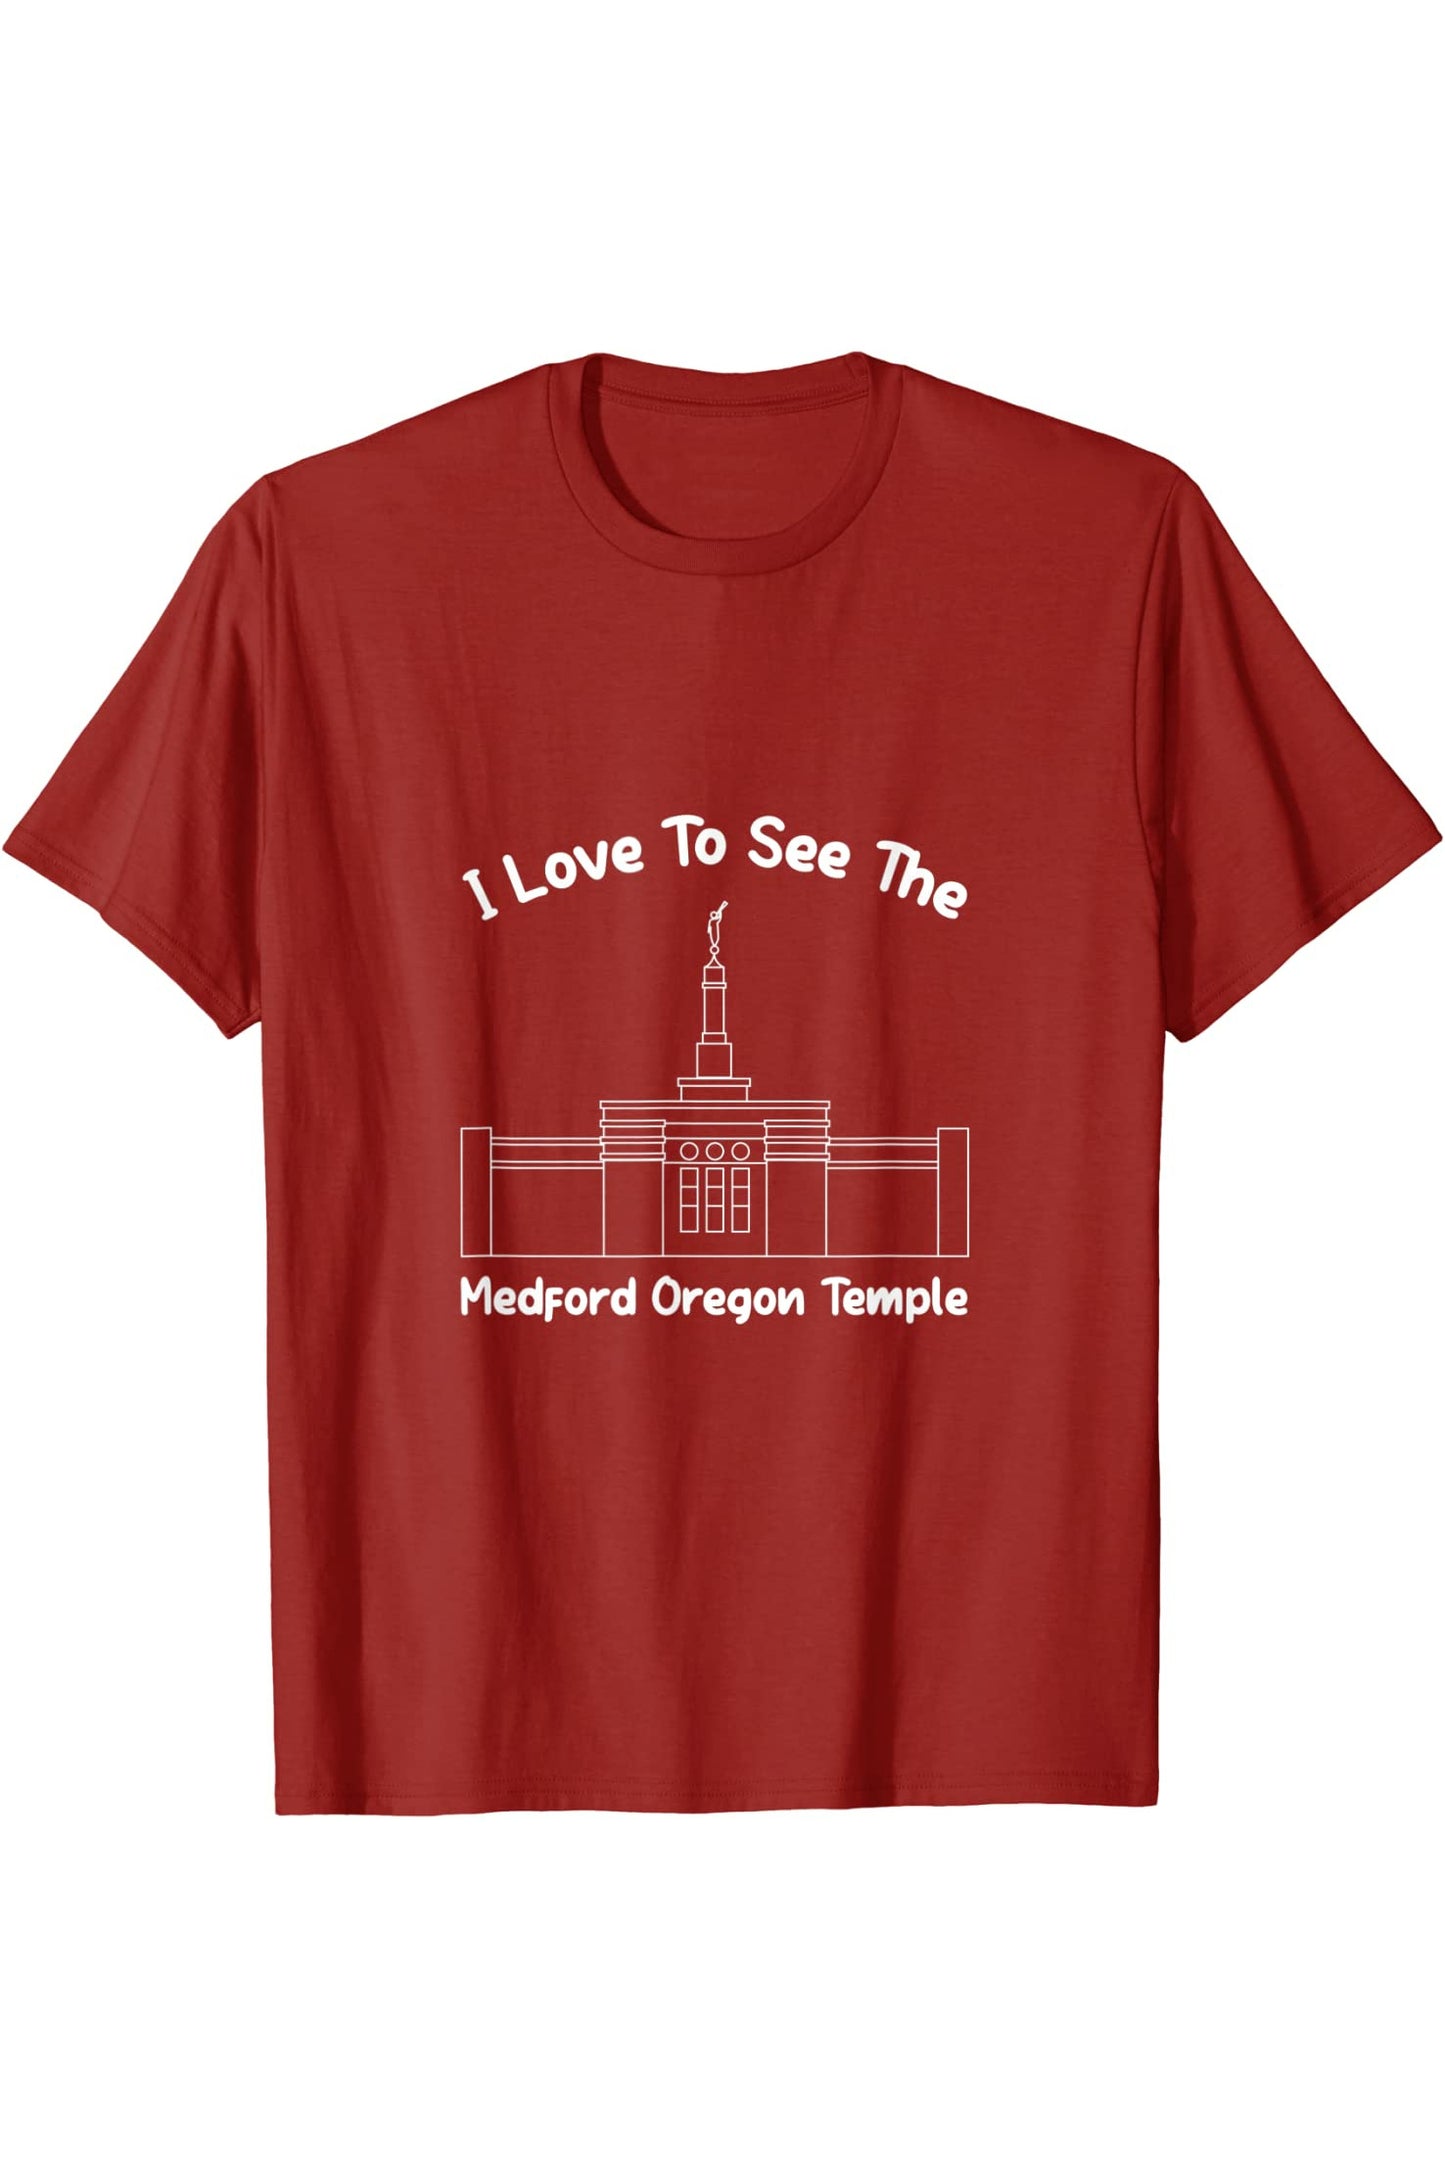 Medford Oregon Temple T-Shirt - Primary Style (English) US